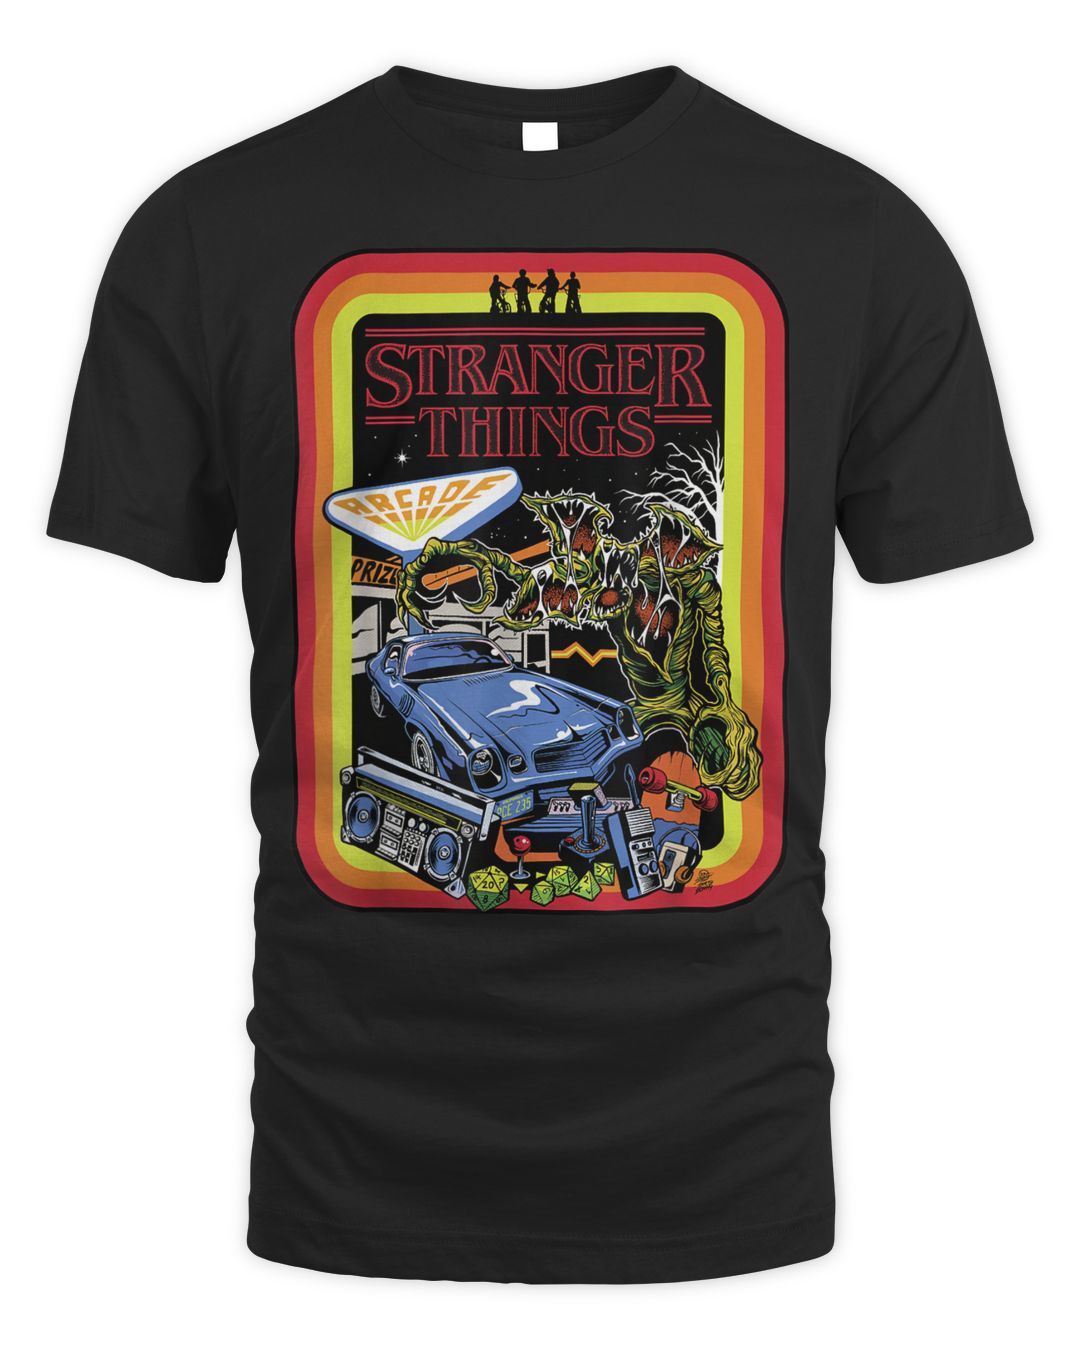 Stranger Things Day Retro Poster Shirt